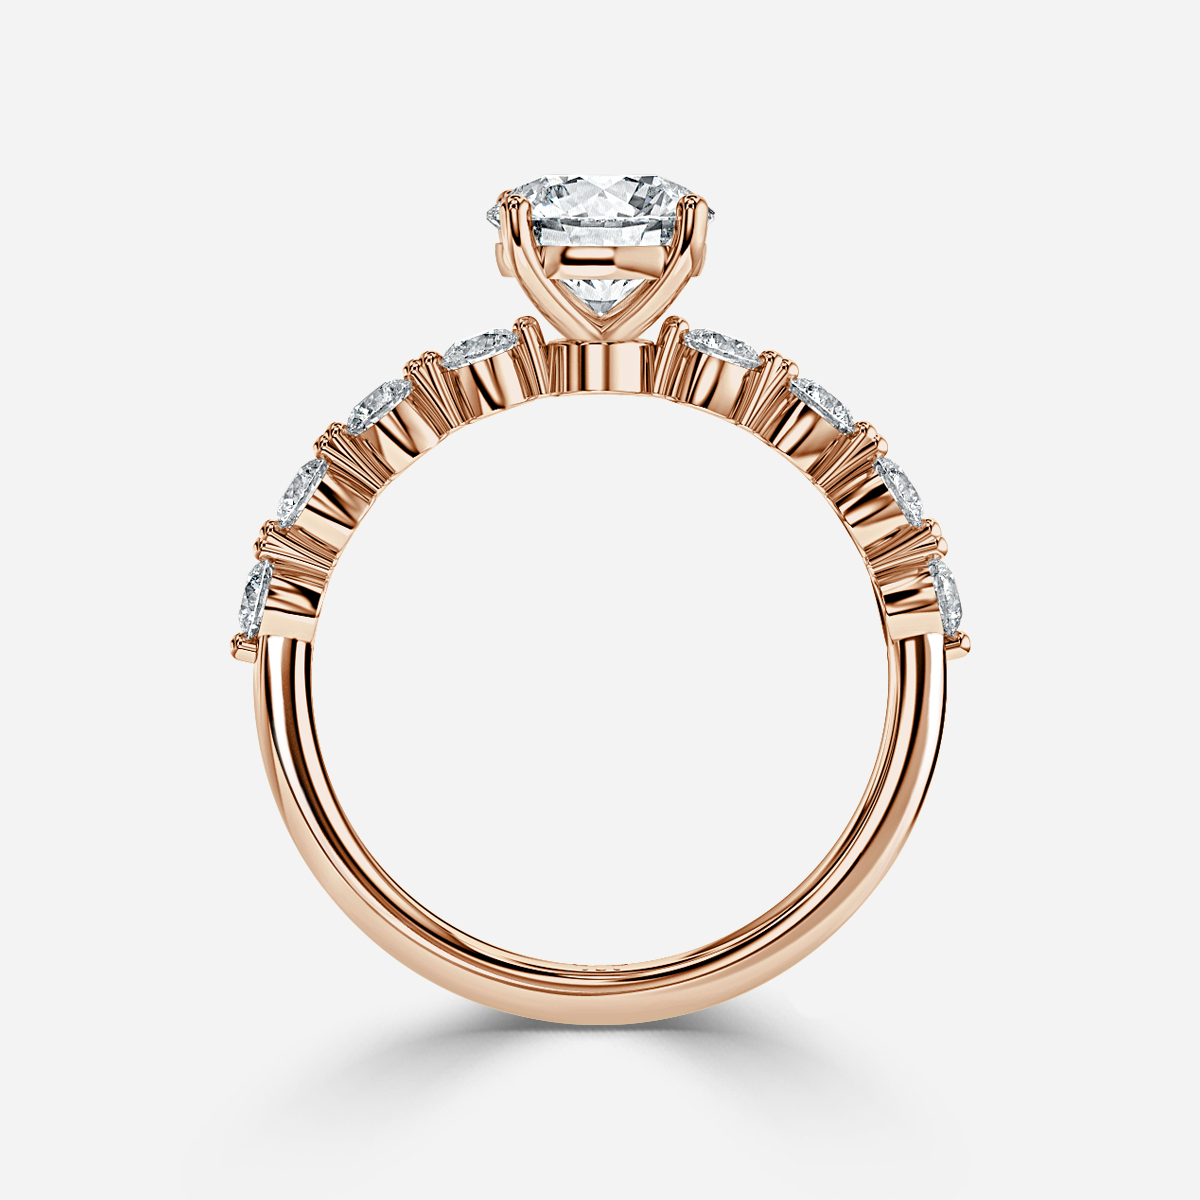 Veronica Rose Gold Unique Engagement Ring